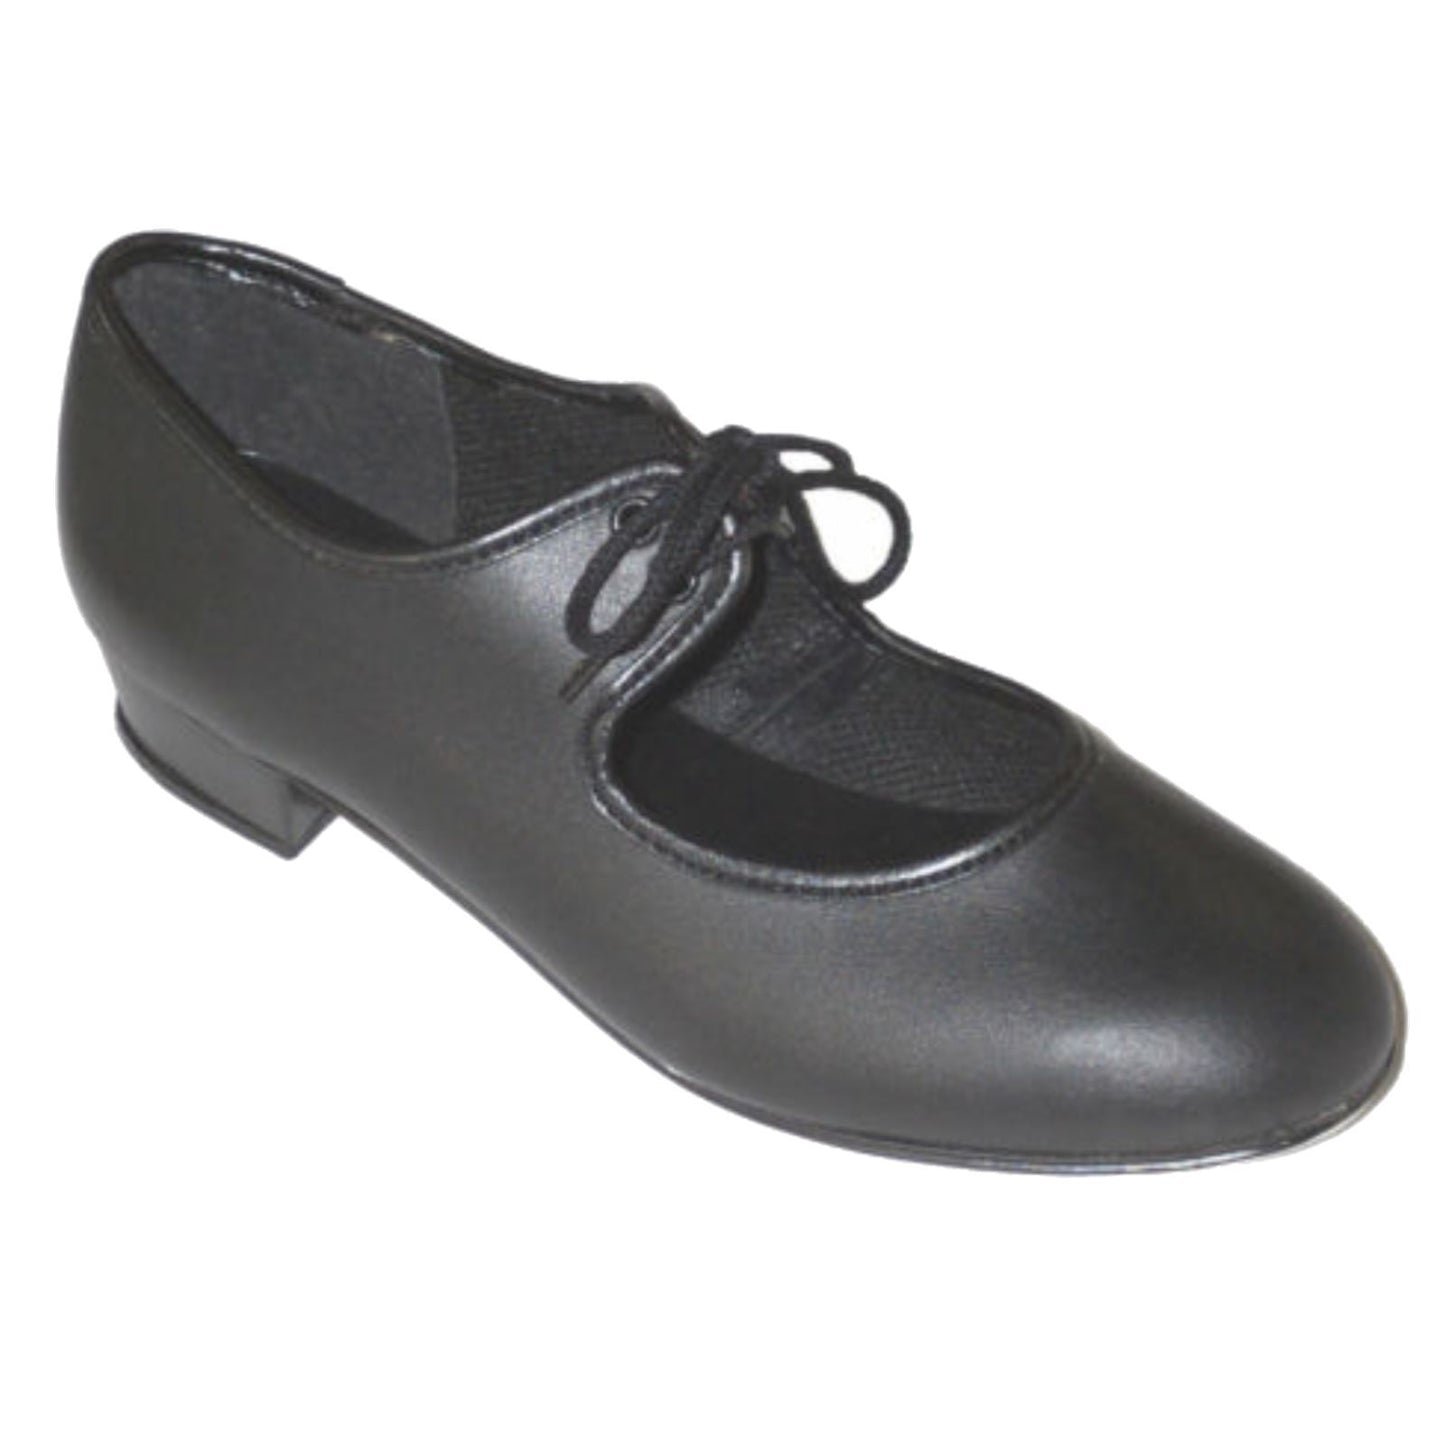 BLACK PU LOW HEEL TAP SHOES - ADULT SIZE 8 Dance Shoes Dancers World Adult 8 